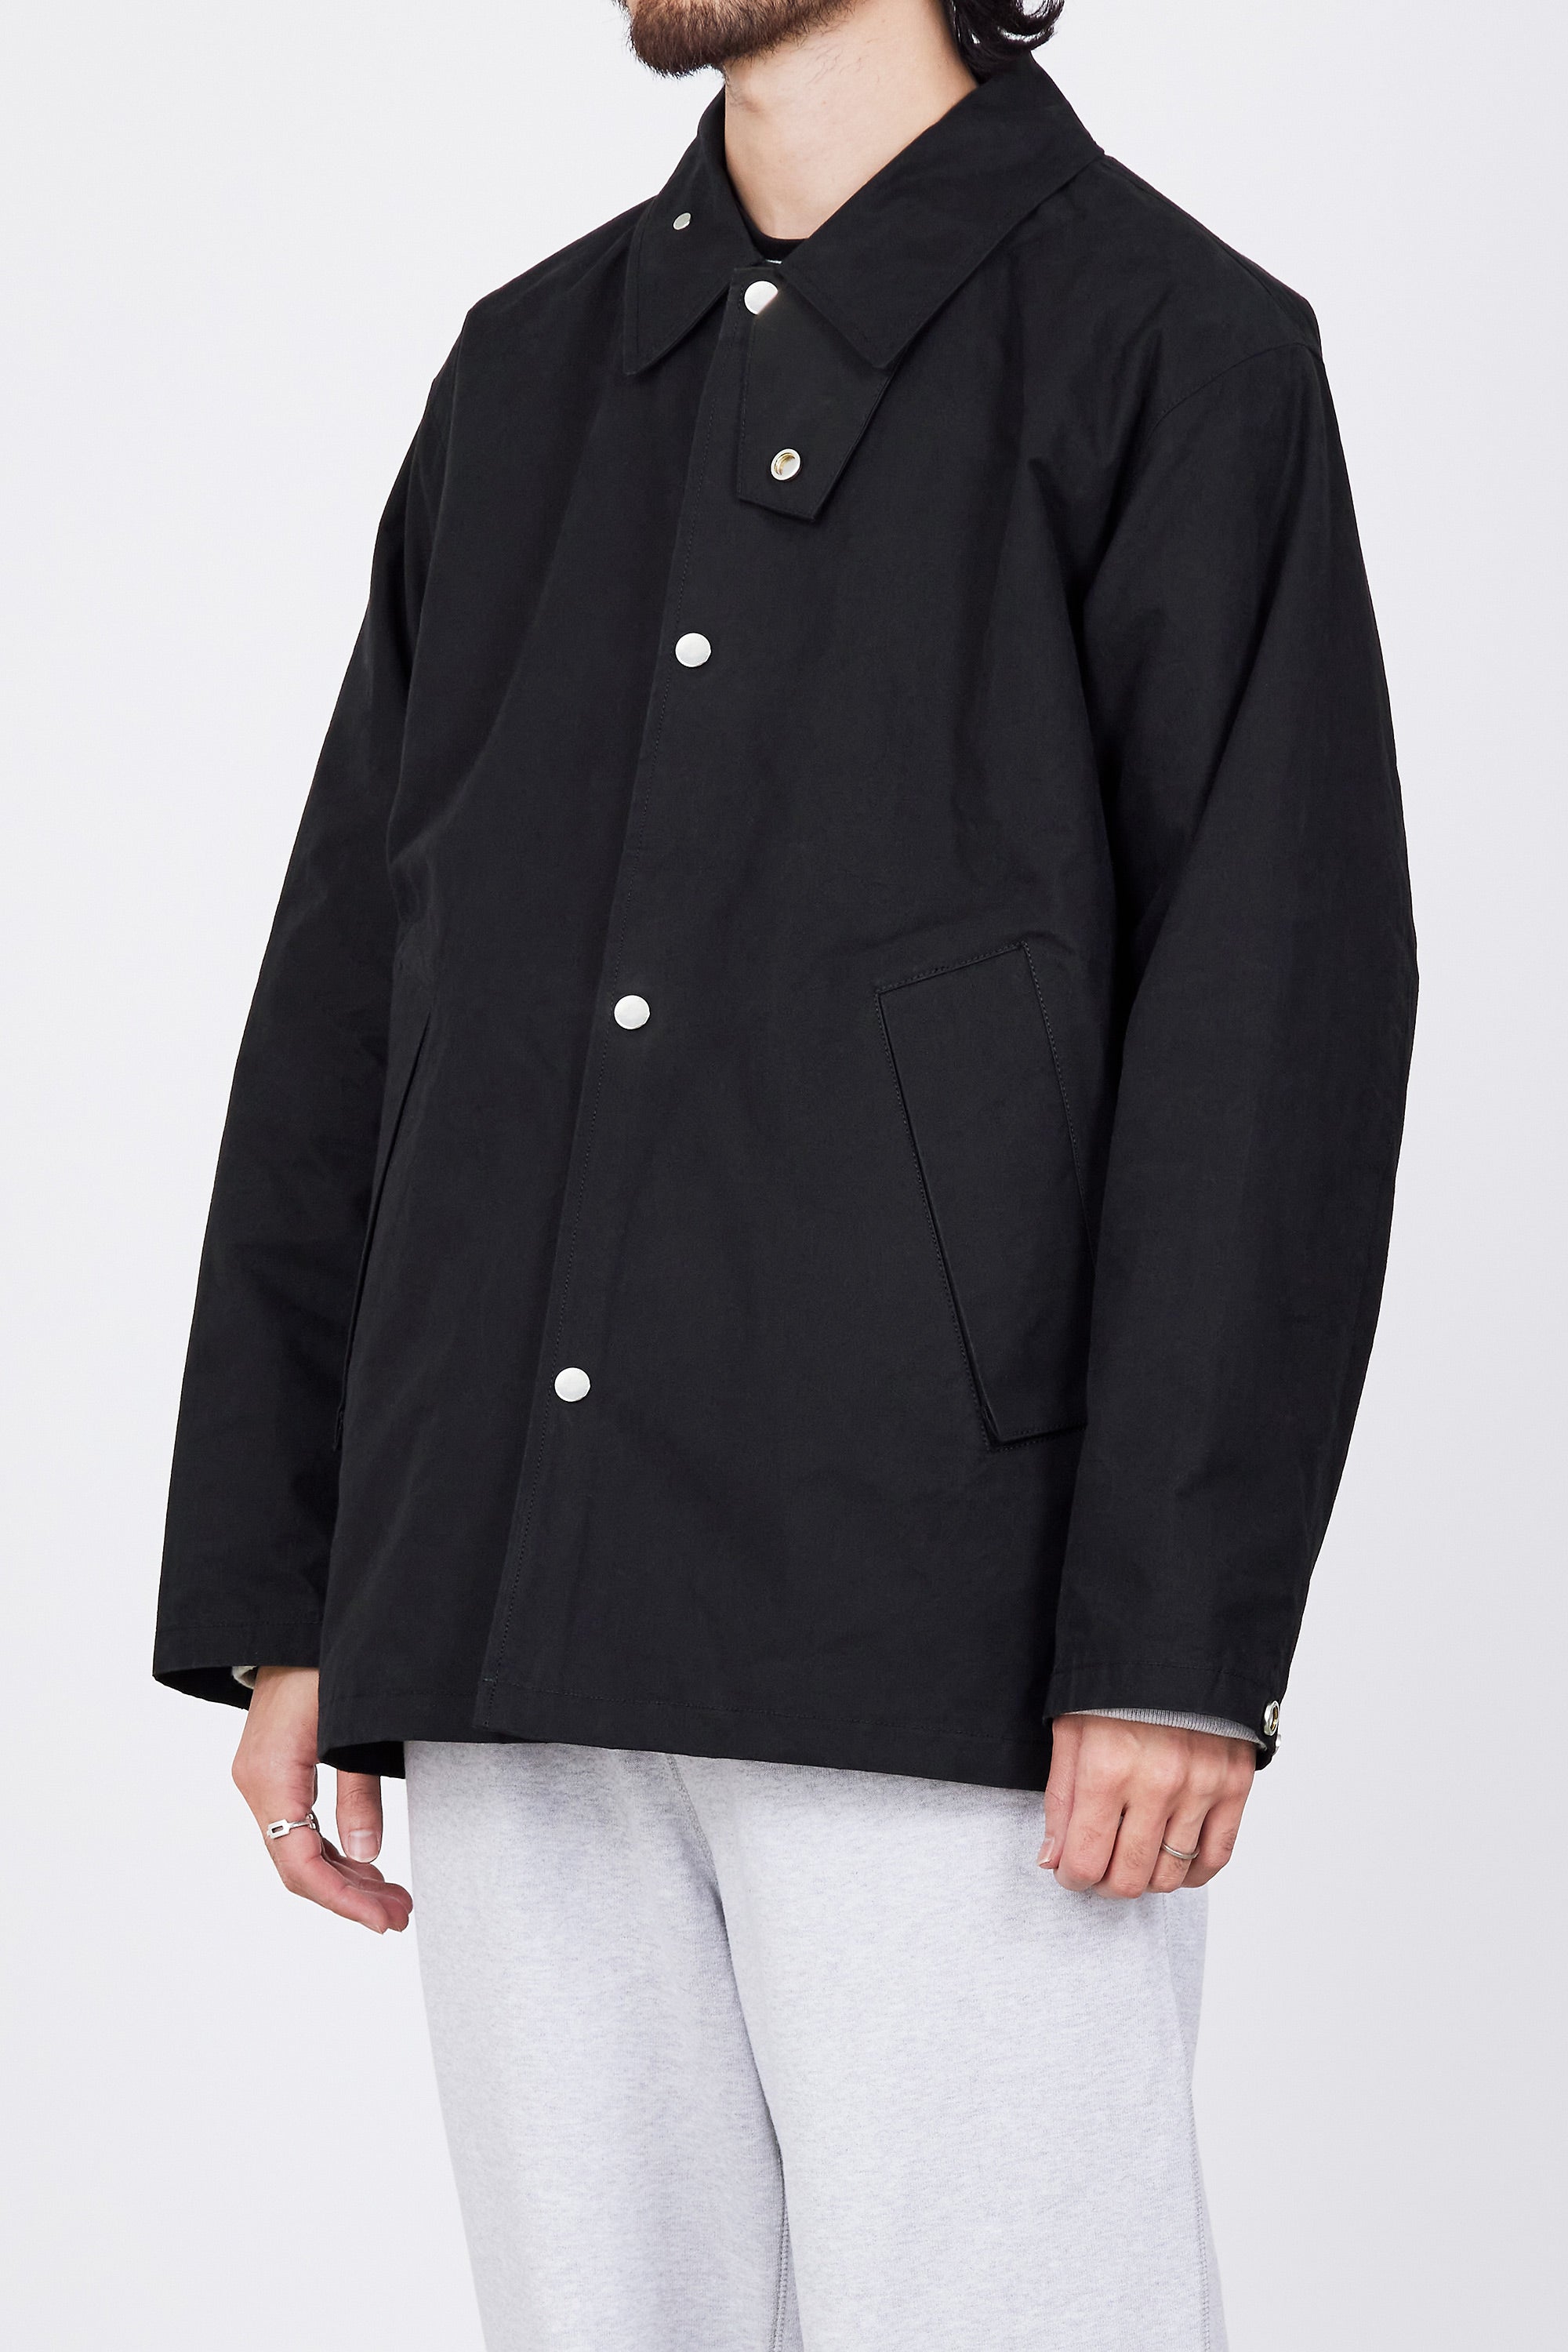 ORGANIC COTTON ALL WEATHER CLOTH TRAVELER COAT, Black